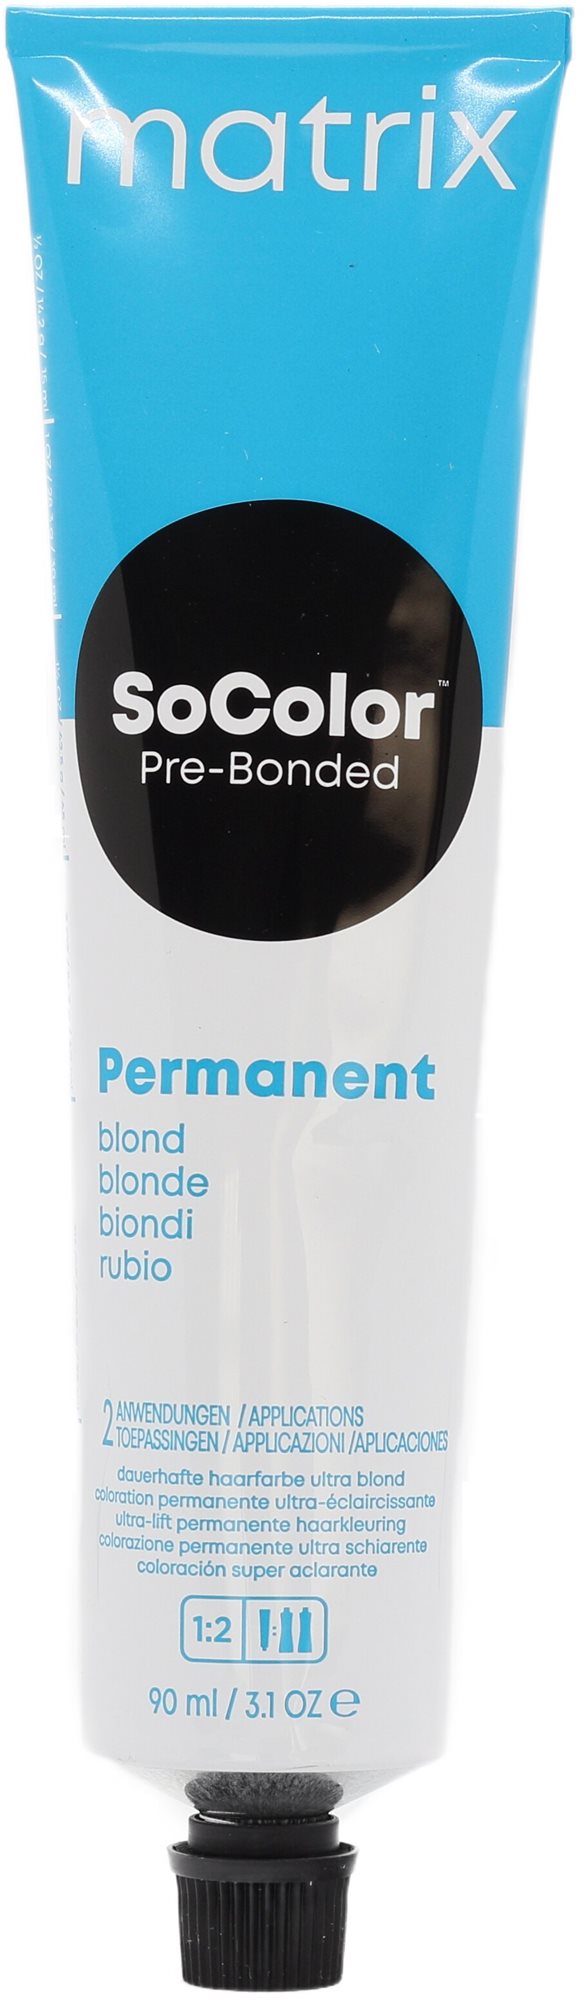 MATRIX Socolor Pre-Bonded Permanent Blond UL-A+ 90 ml